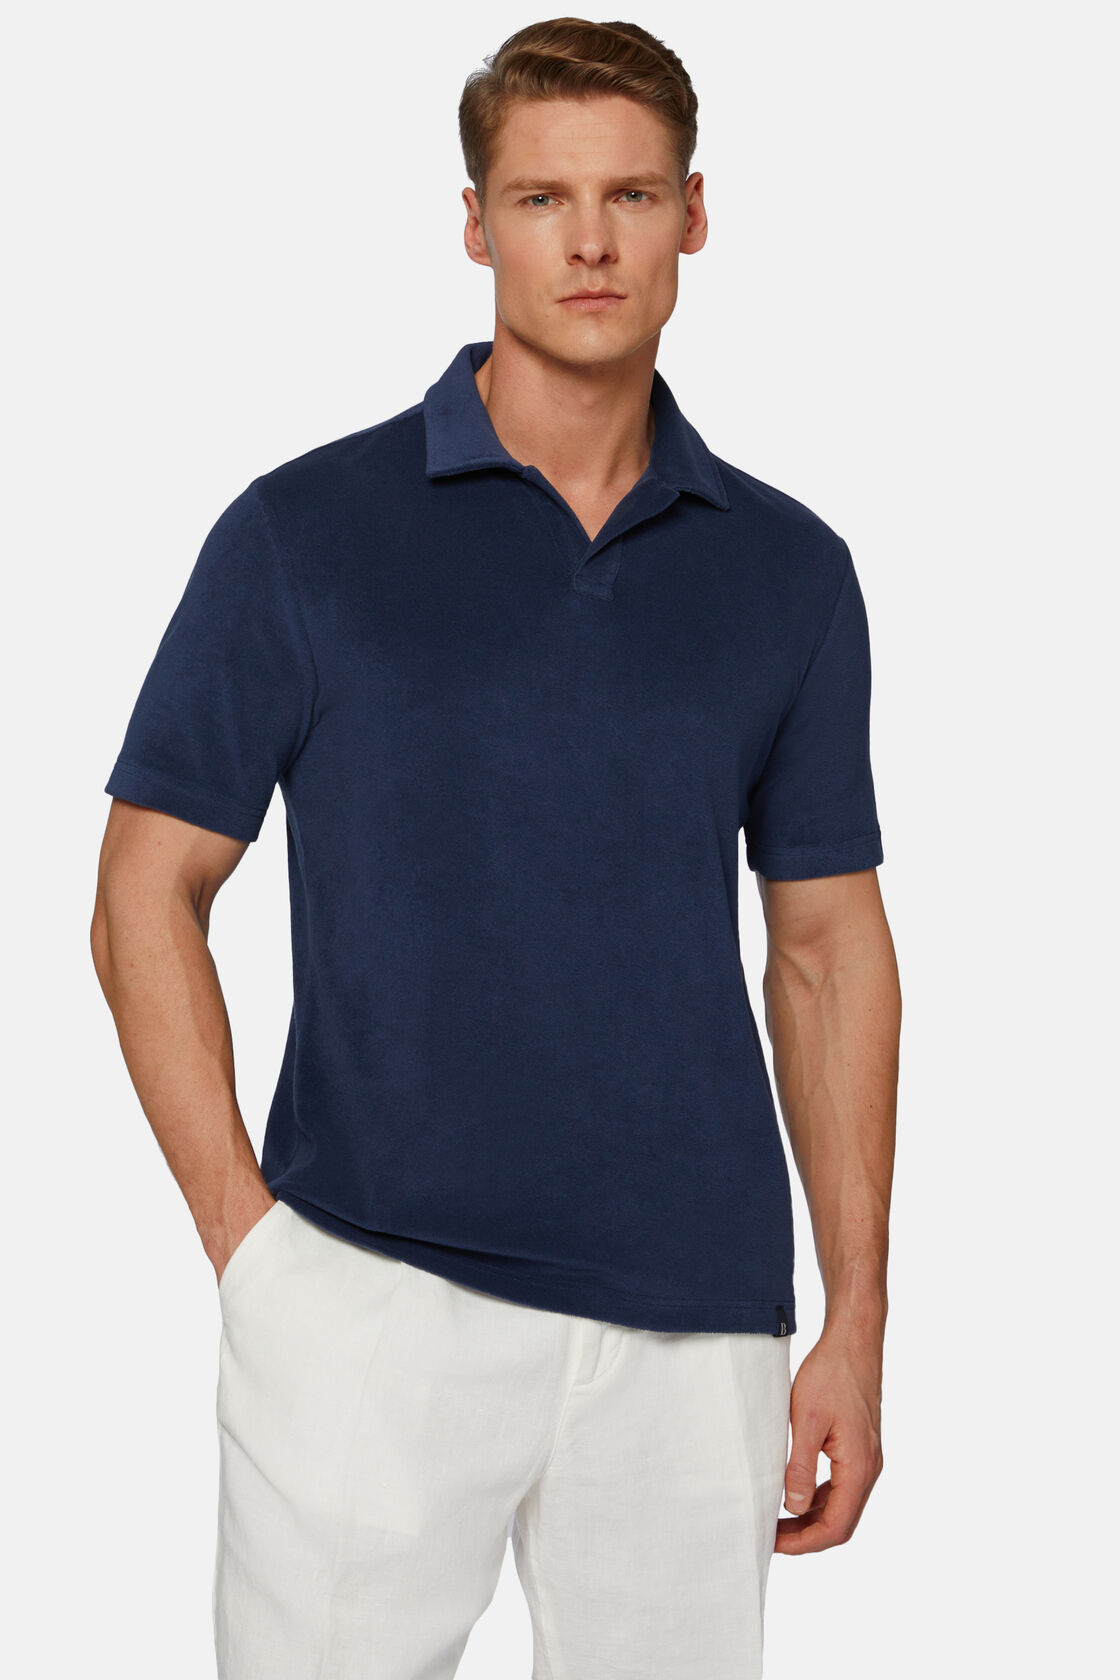 Cotton/Nylon Polo Shirt, Navy blue, hi-res